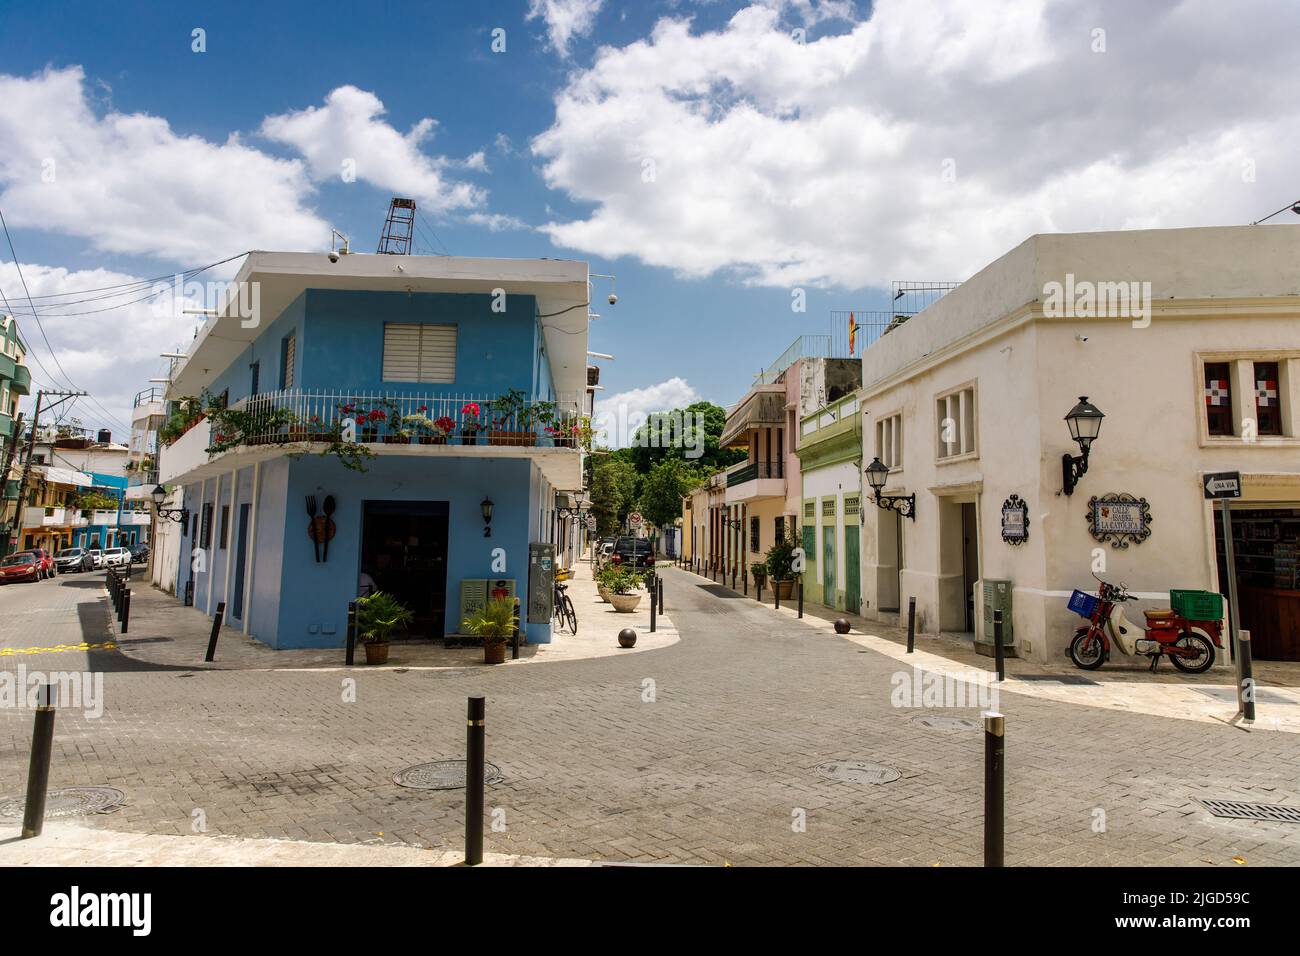 Gemütliche Straßen Lateinamerikas. SANTO DOMINGO, DOMINIKANISCHE REPUBLIK Kolonialzone von Santo Domingo, UNESCO-Weltkulturerbe. Stockfoto